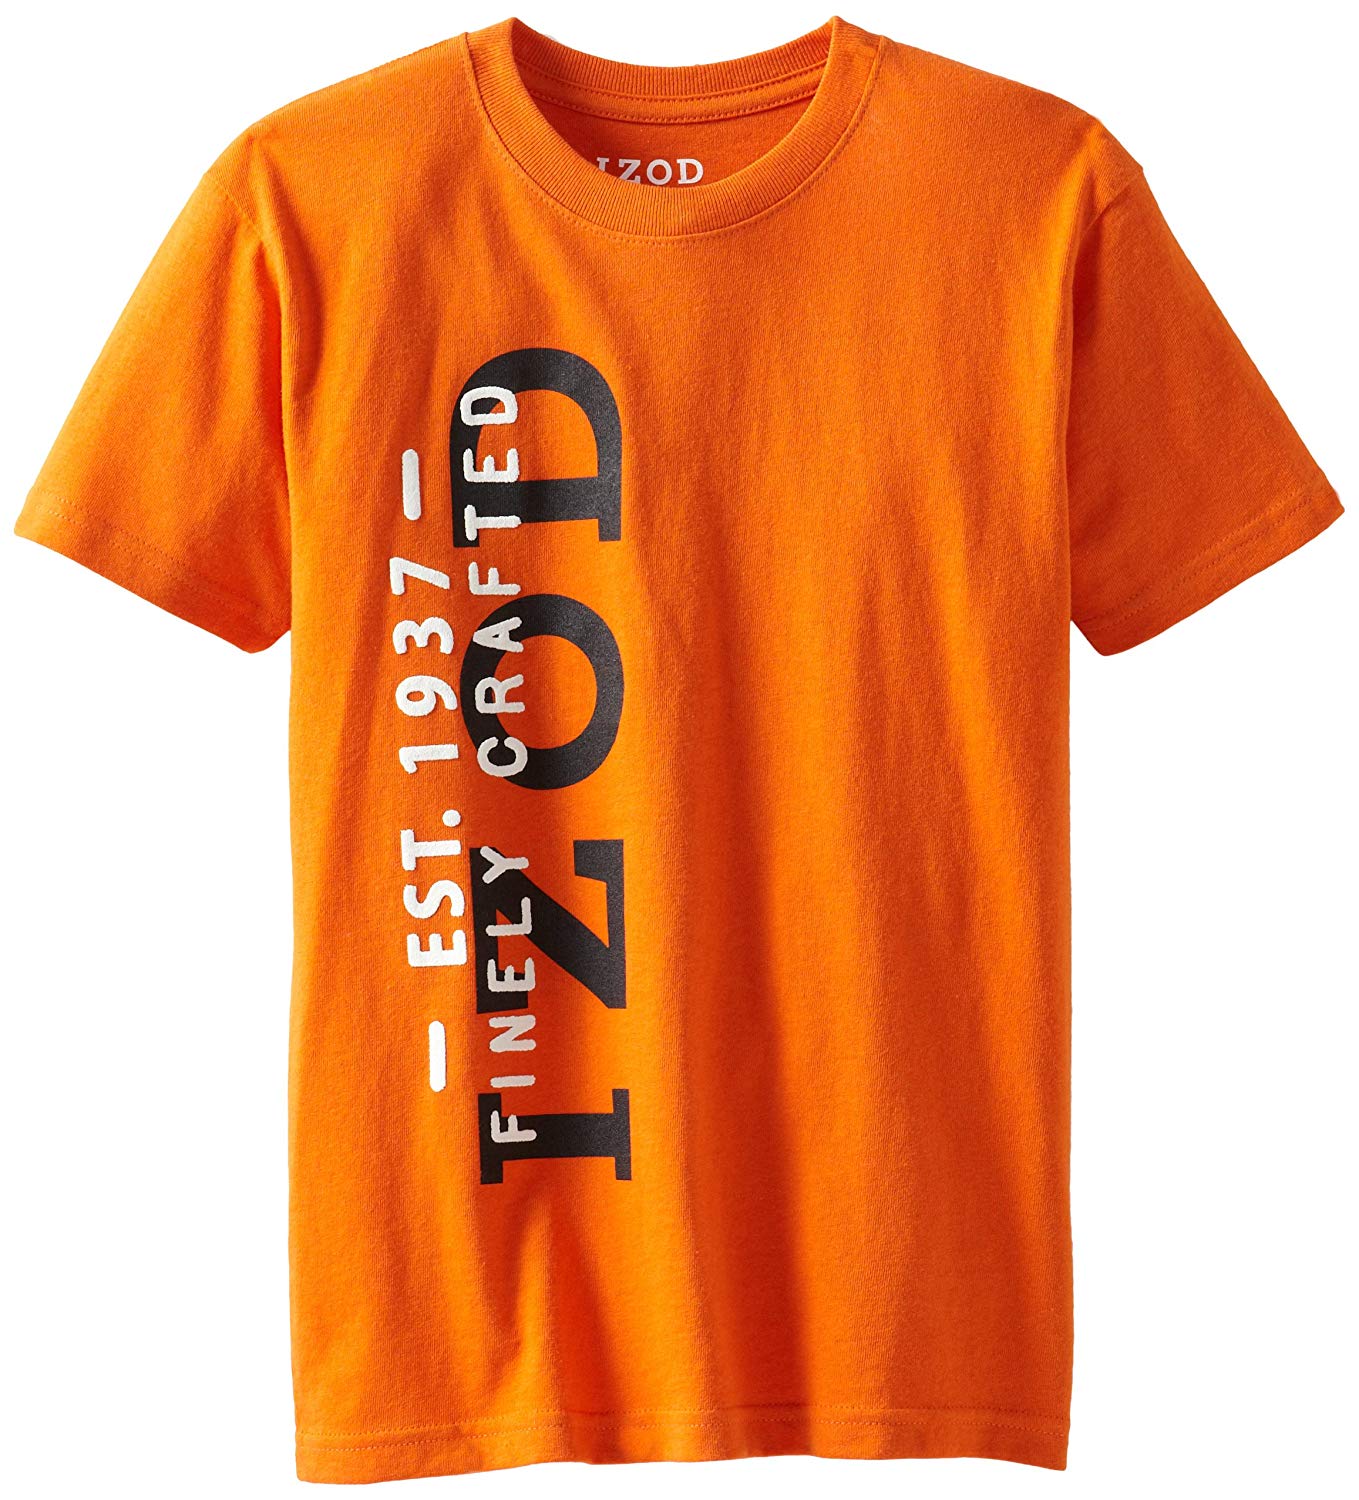 Izod Clothing Logo - Amazon.com: IZOD Big Boys' Logo Vertical Tee, Clementine, Medium (10 ...